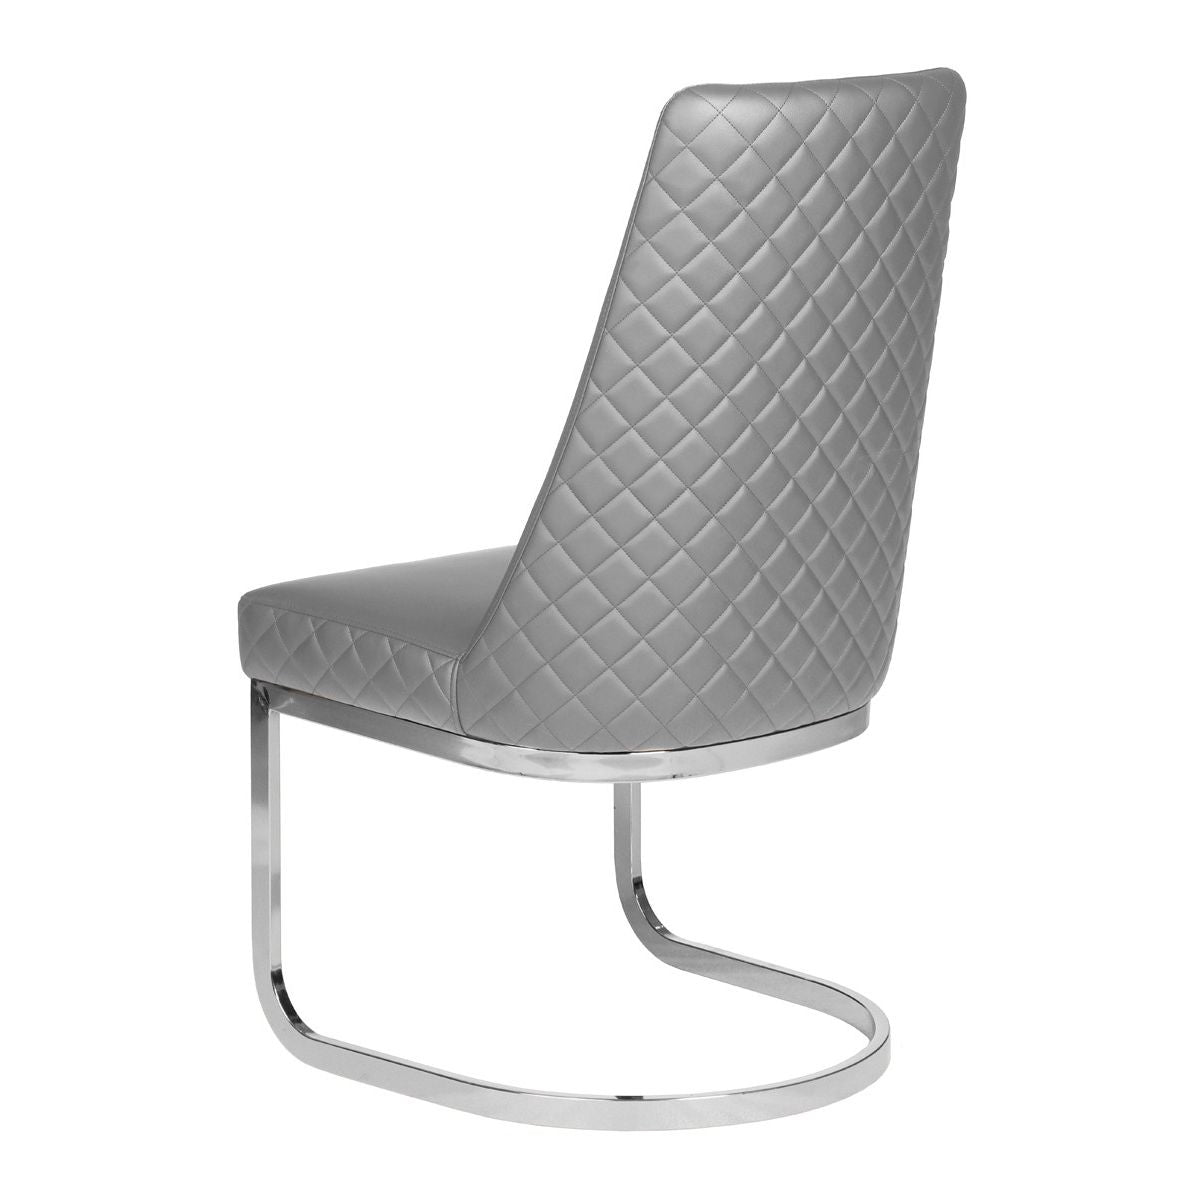 Whale Spa Whale Spa Diamond Acetone Safe Customer Chair Customer Chair - ChairsThatGive